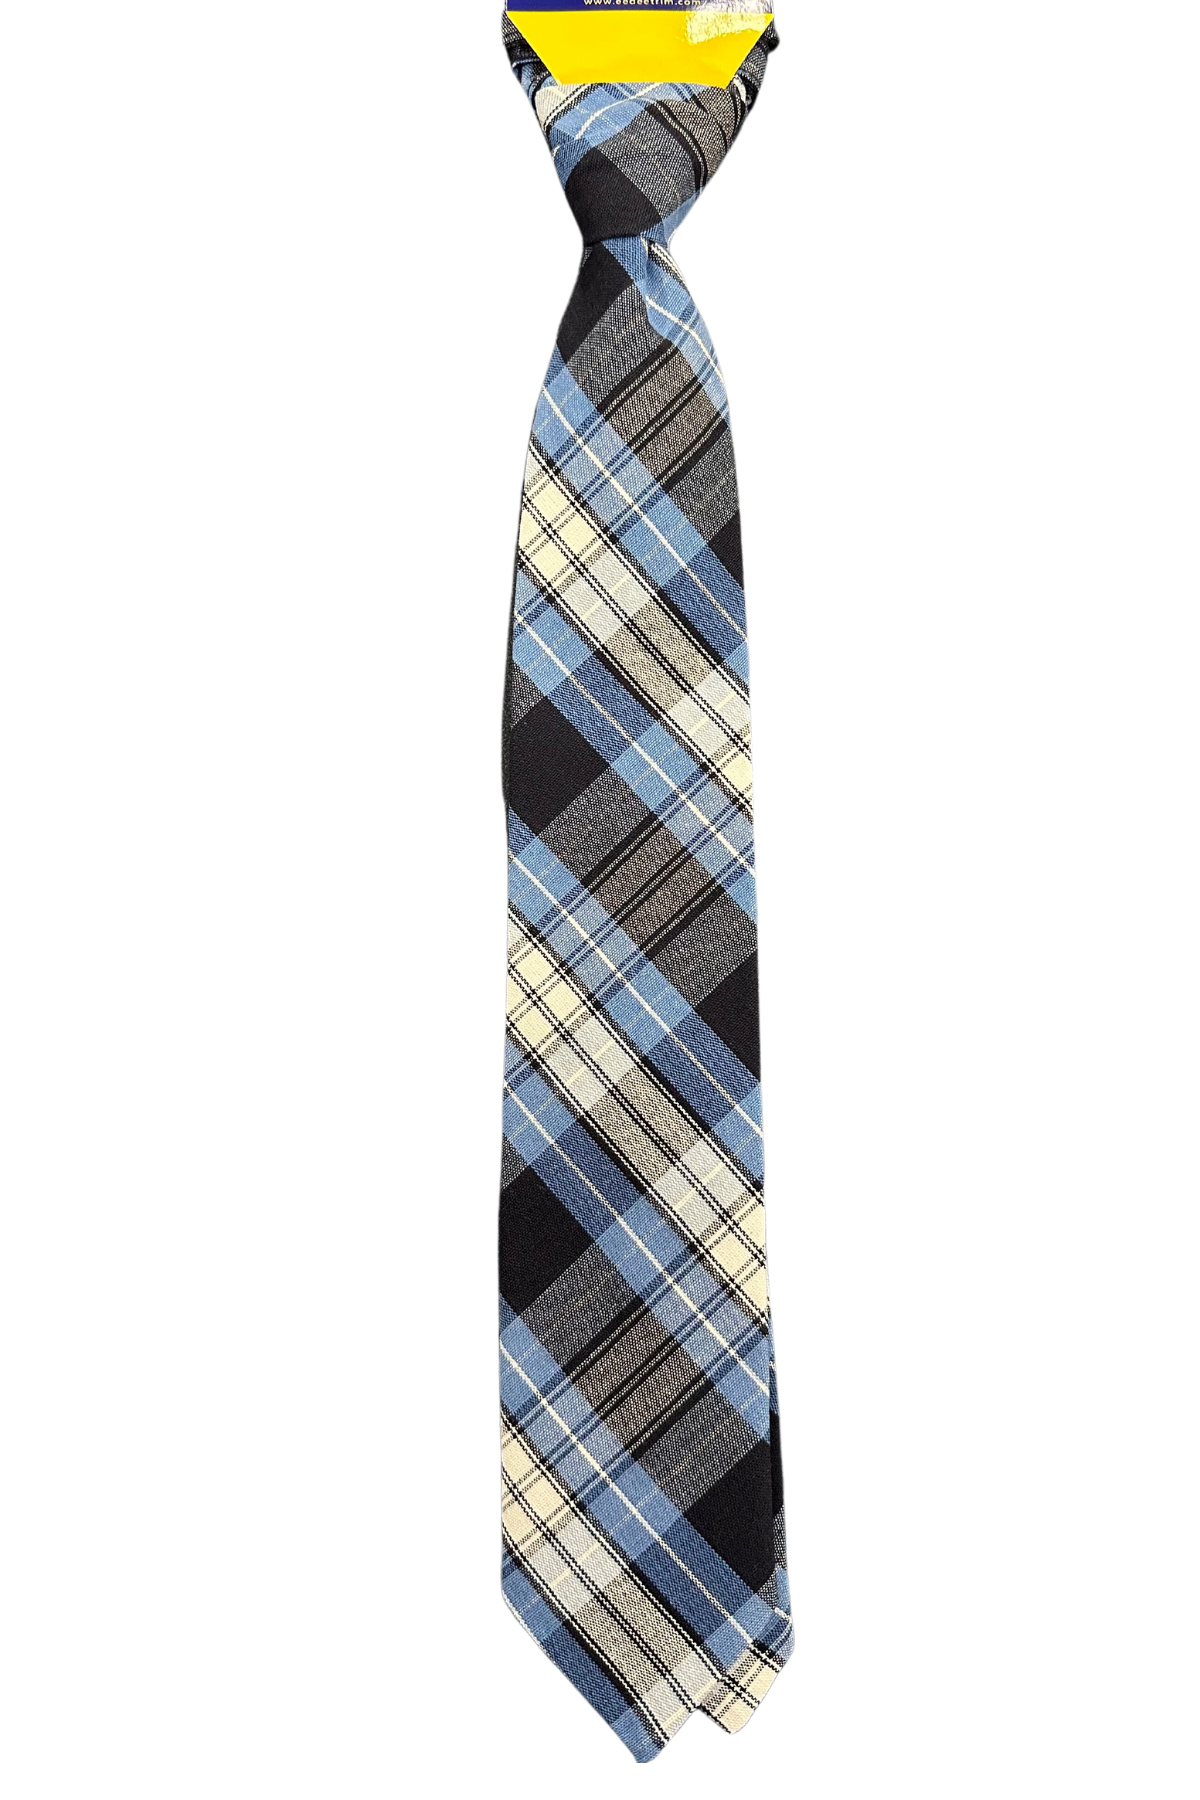 Brainerd Baptist Plaid Tie